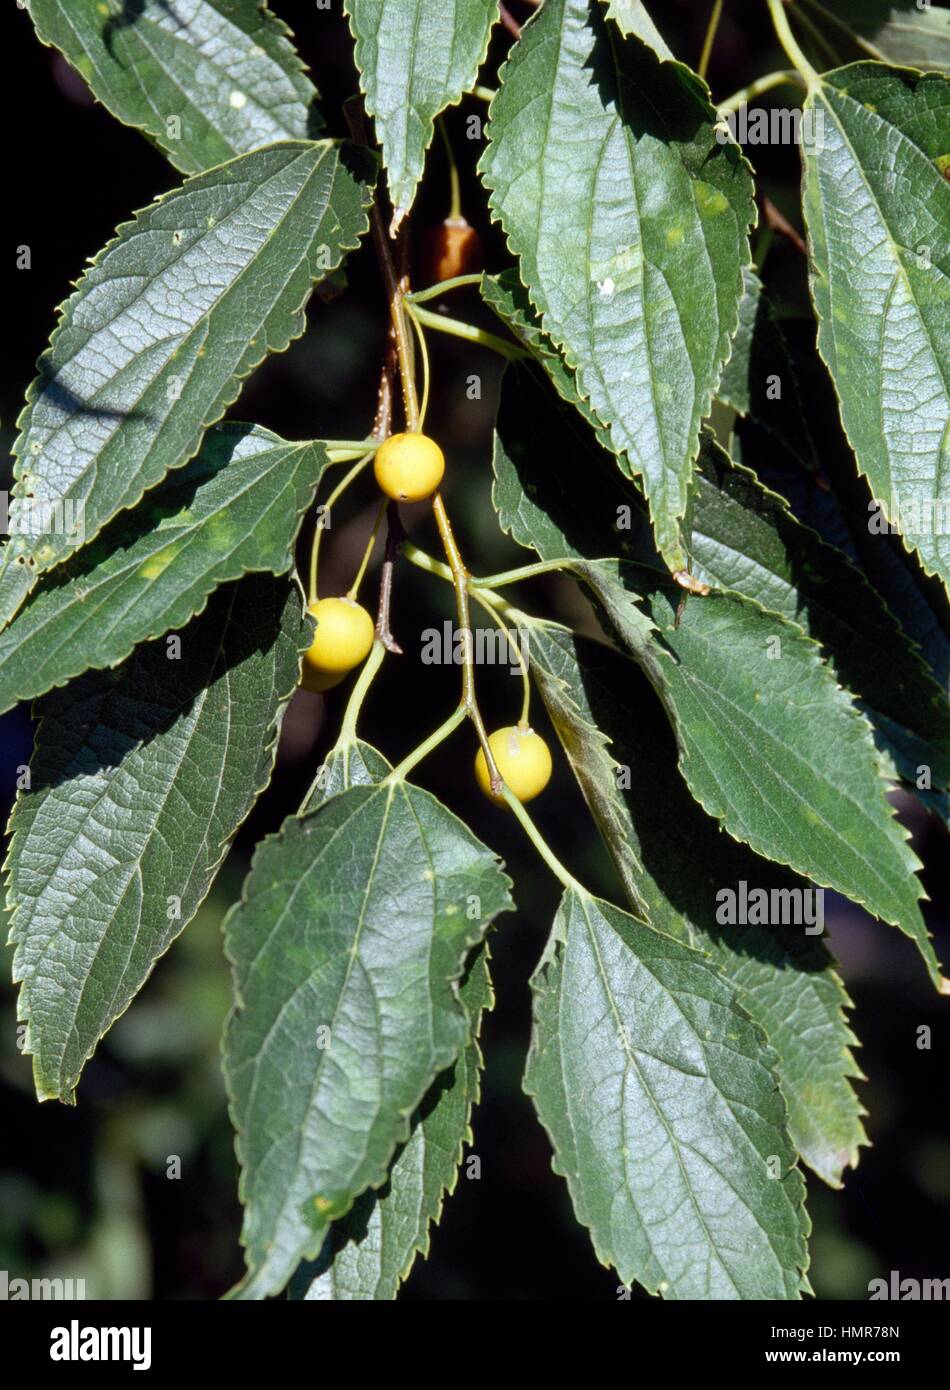 Hackberry leaves (Celtis australis), Ulmaceae. Stock Photo